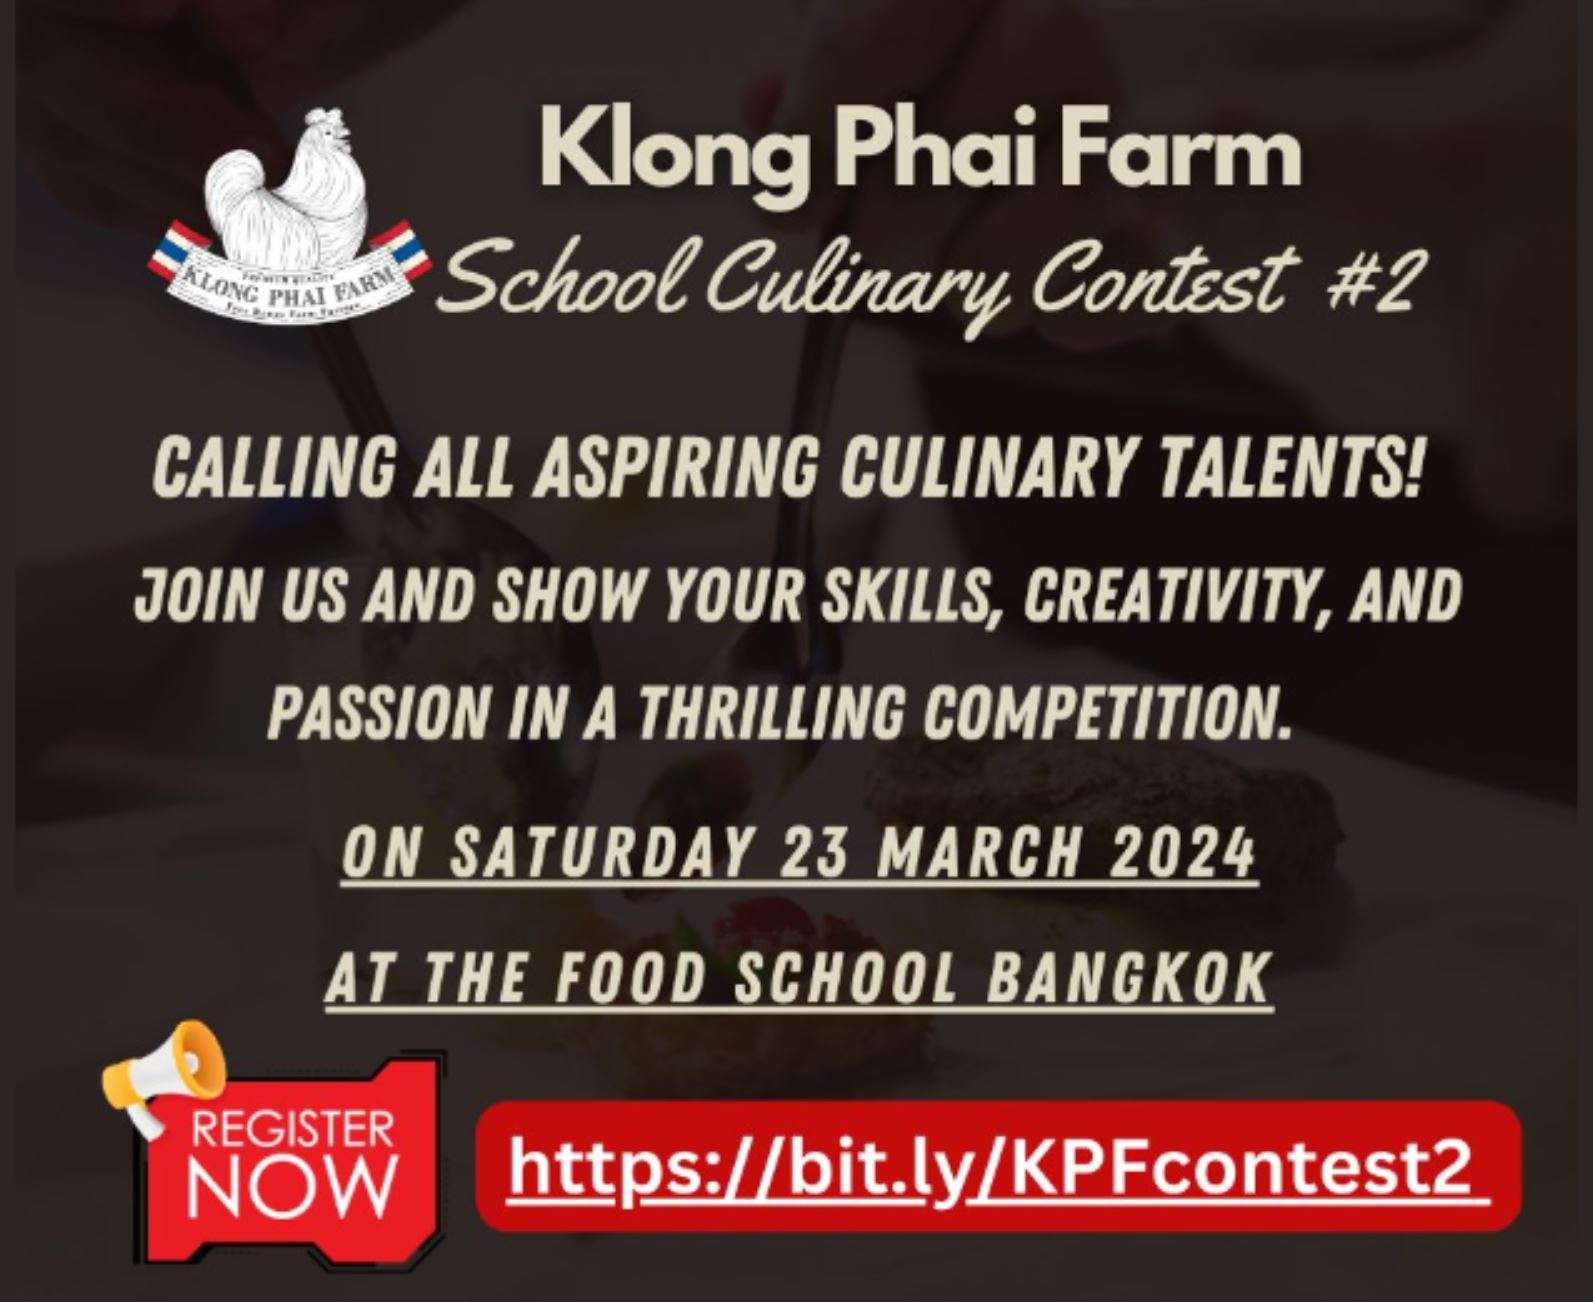 Klong Phai Farm School Culinary Contest #2